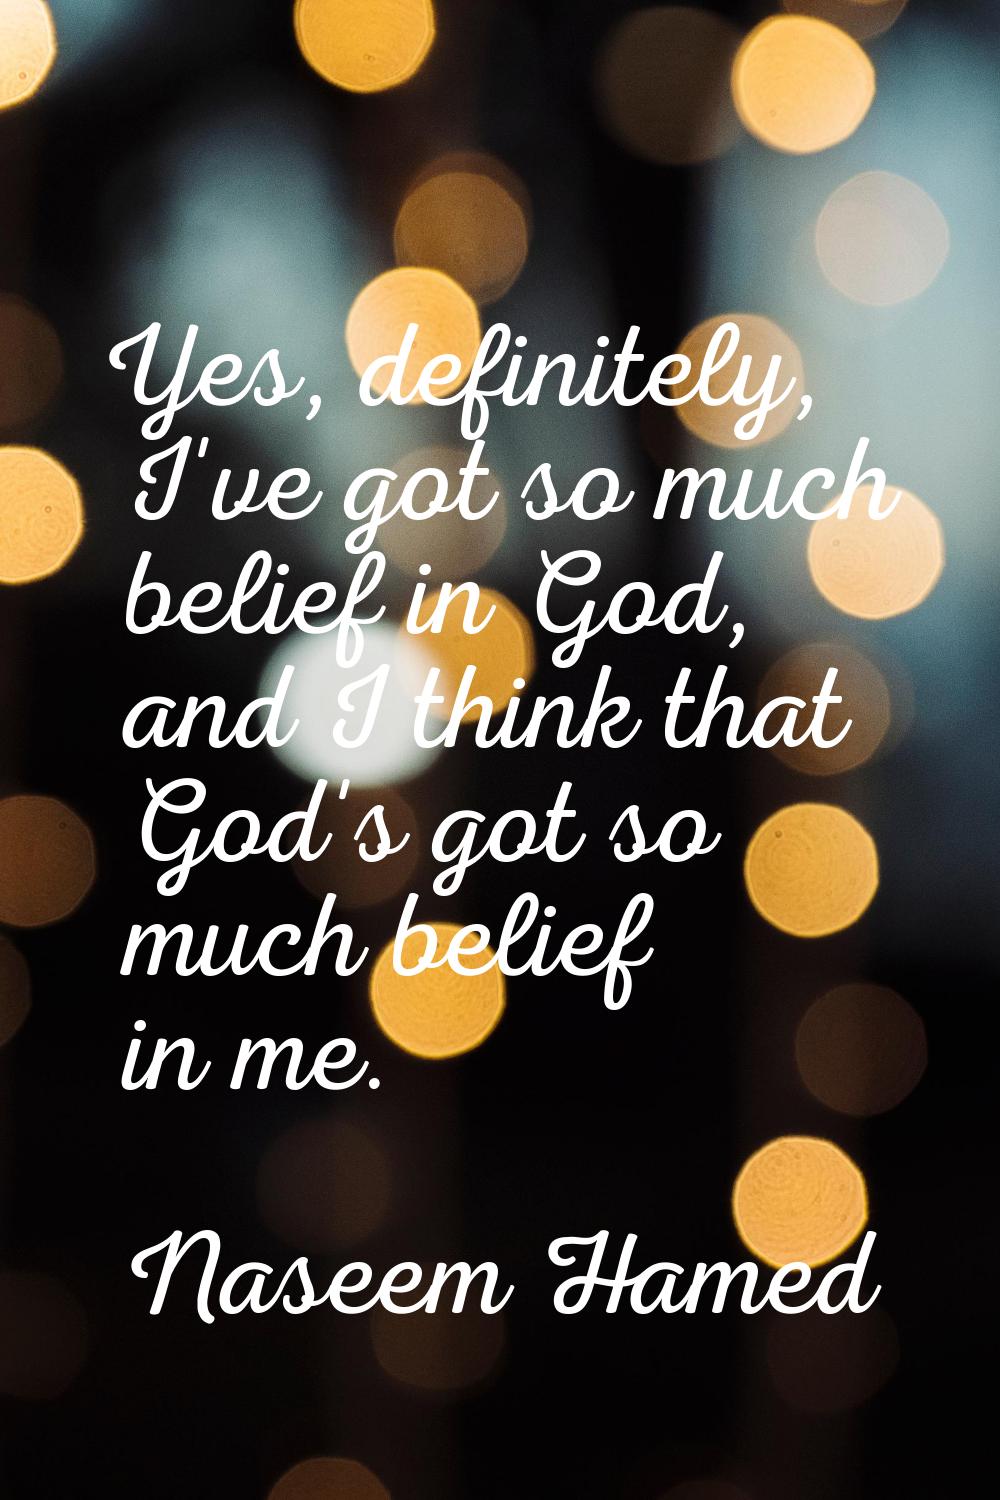 Yes, definitely, I've got so much belief in God, and I think that God's got so much belief in me.